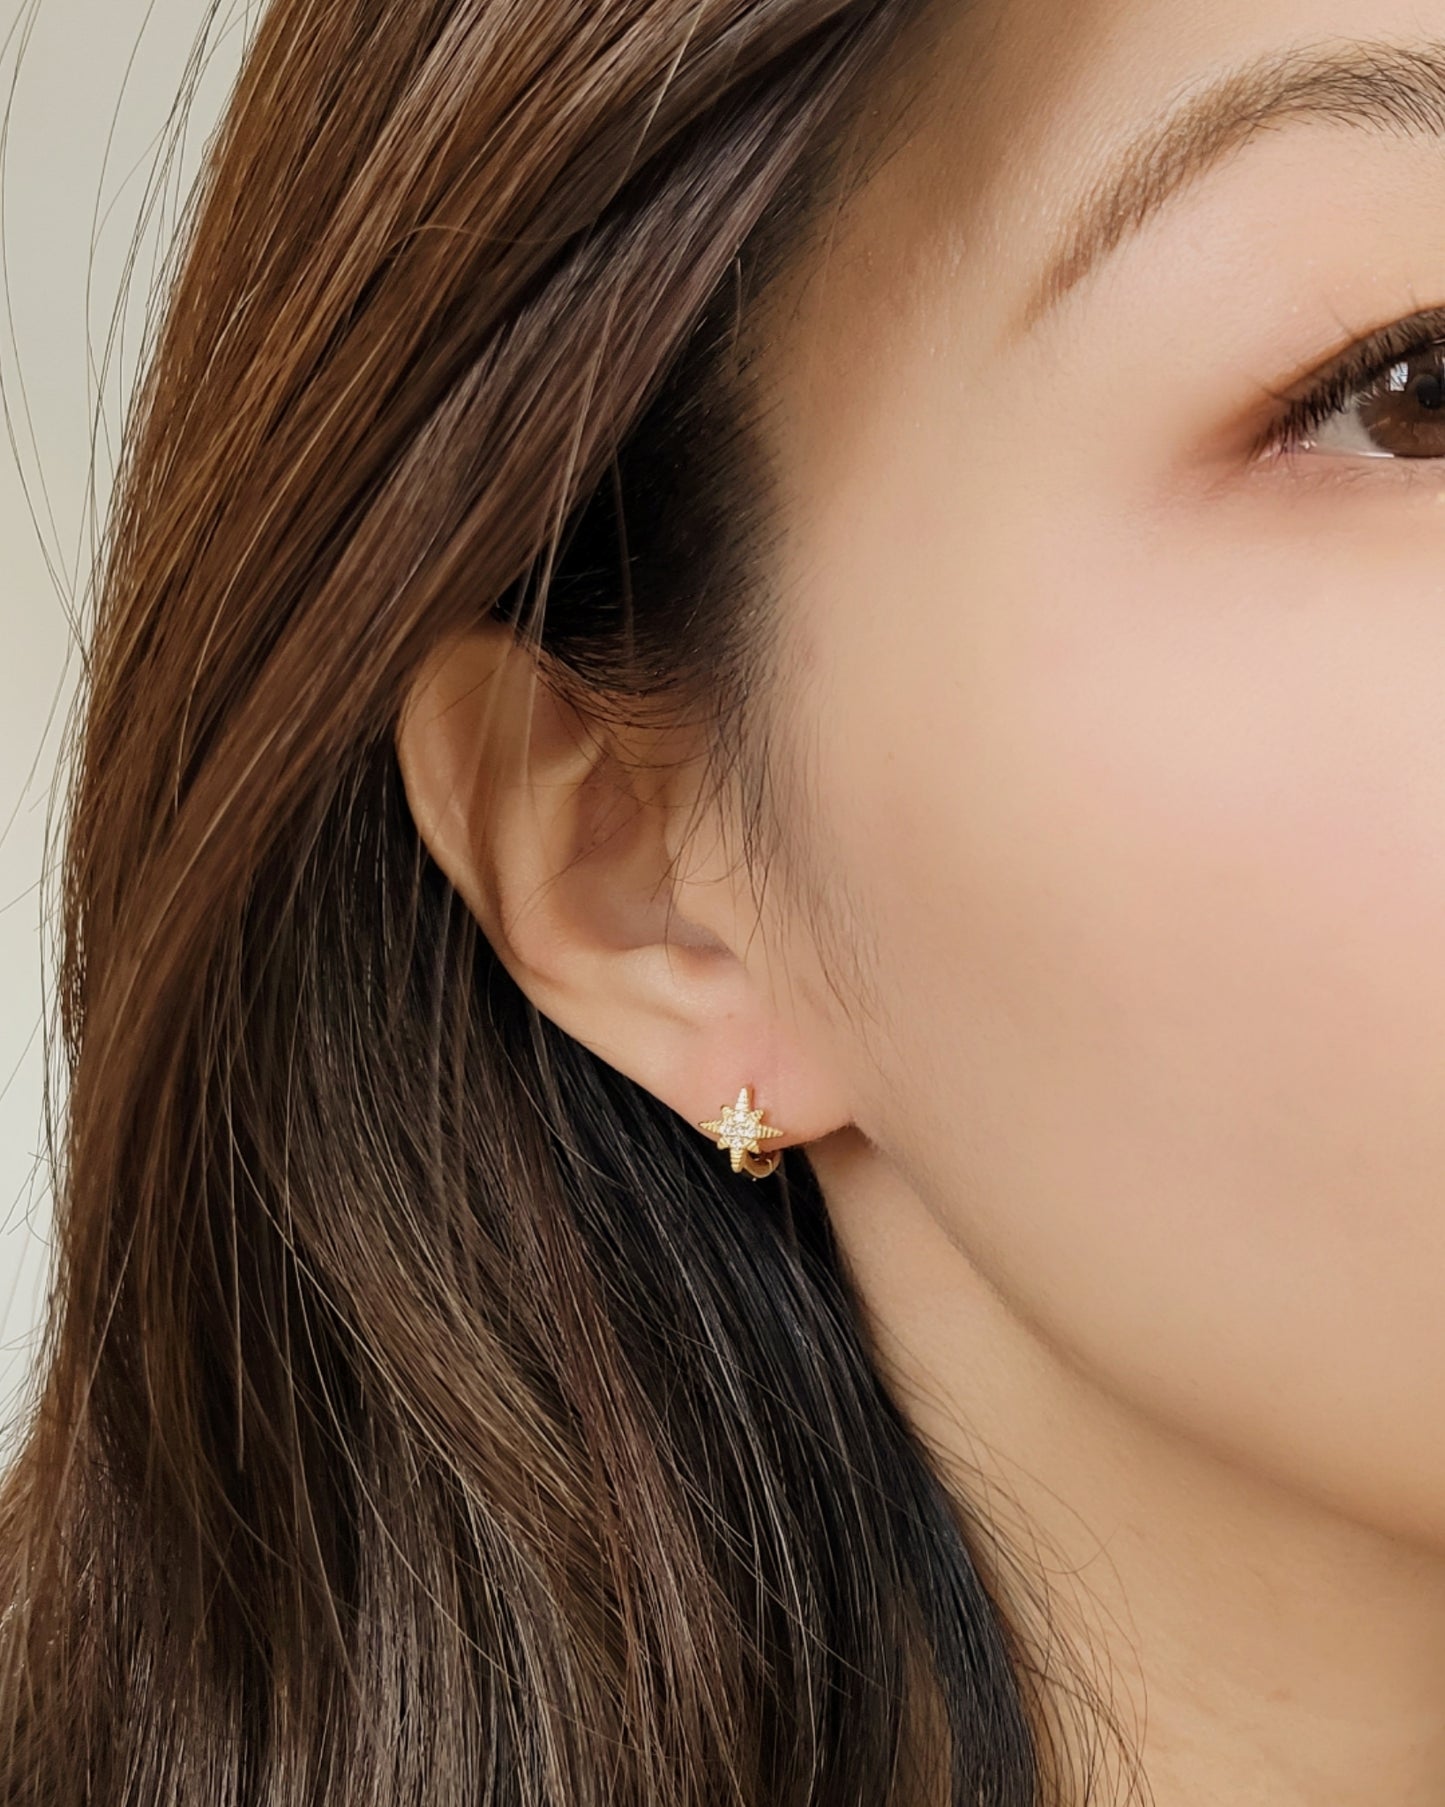 gold hoop earrings with star